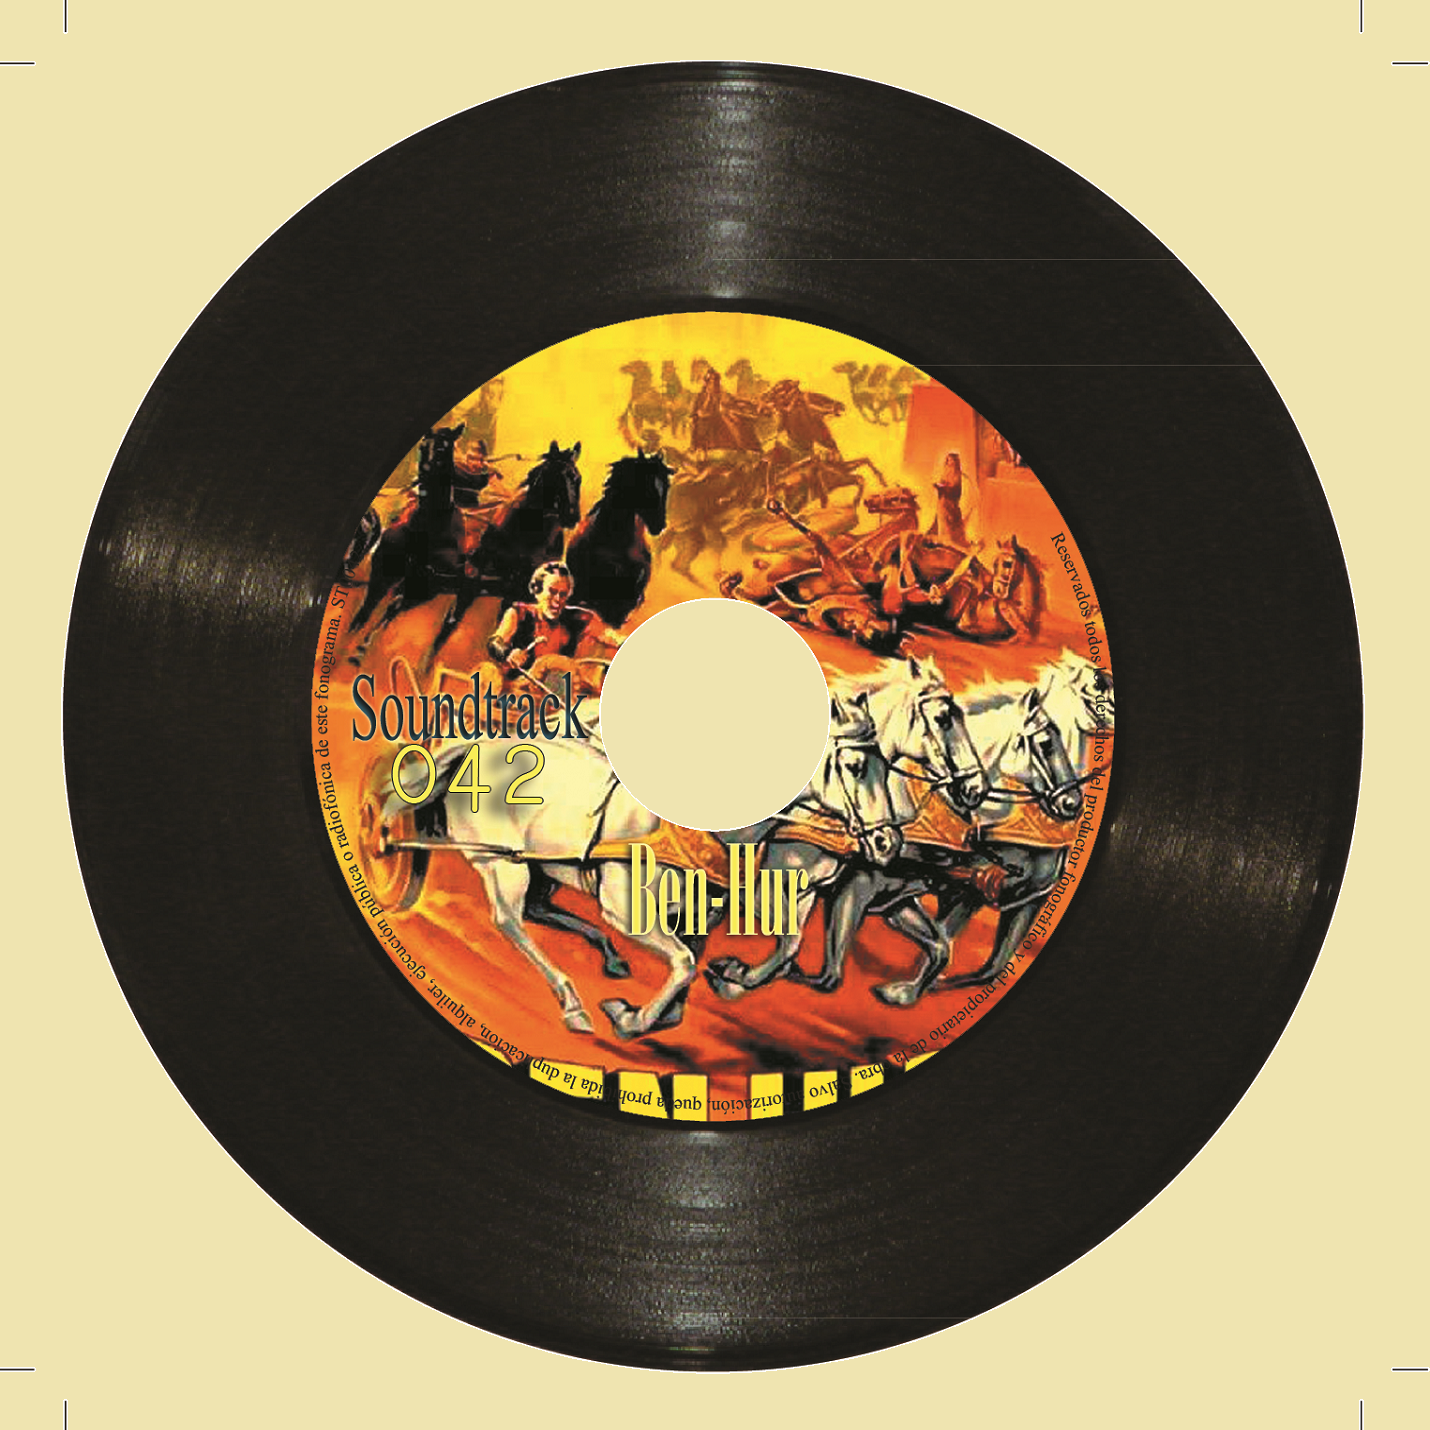 Ben-Hur (Colección Soundtrack - #42)